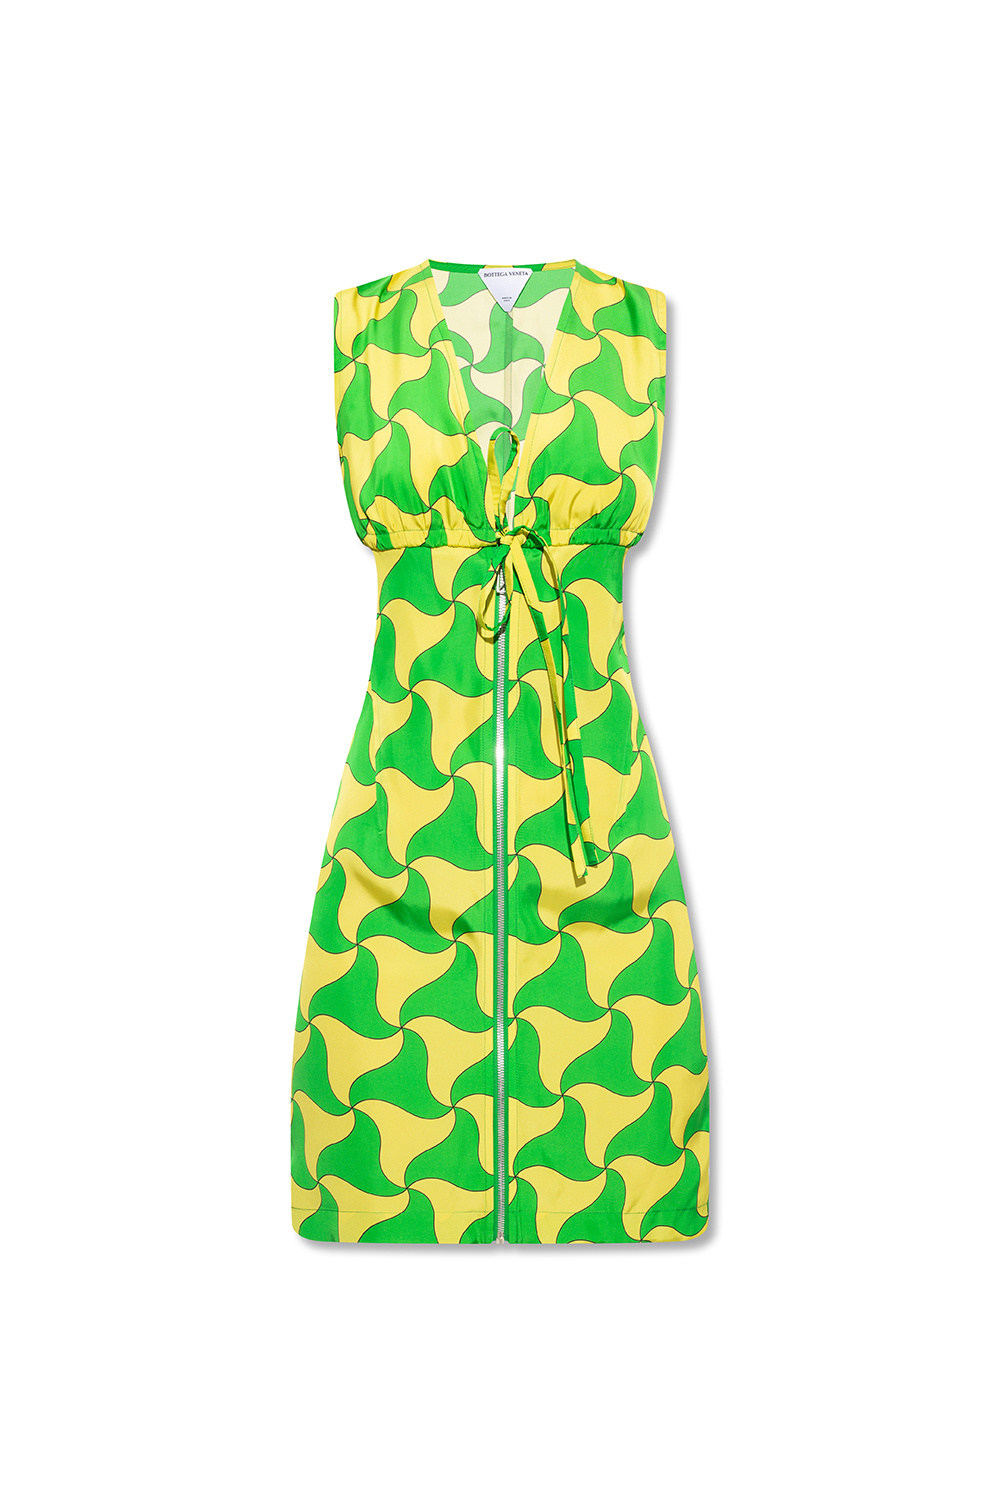 Bottega Veneta Dress with geometric pattern